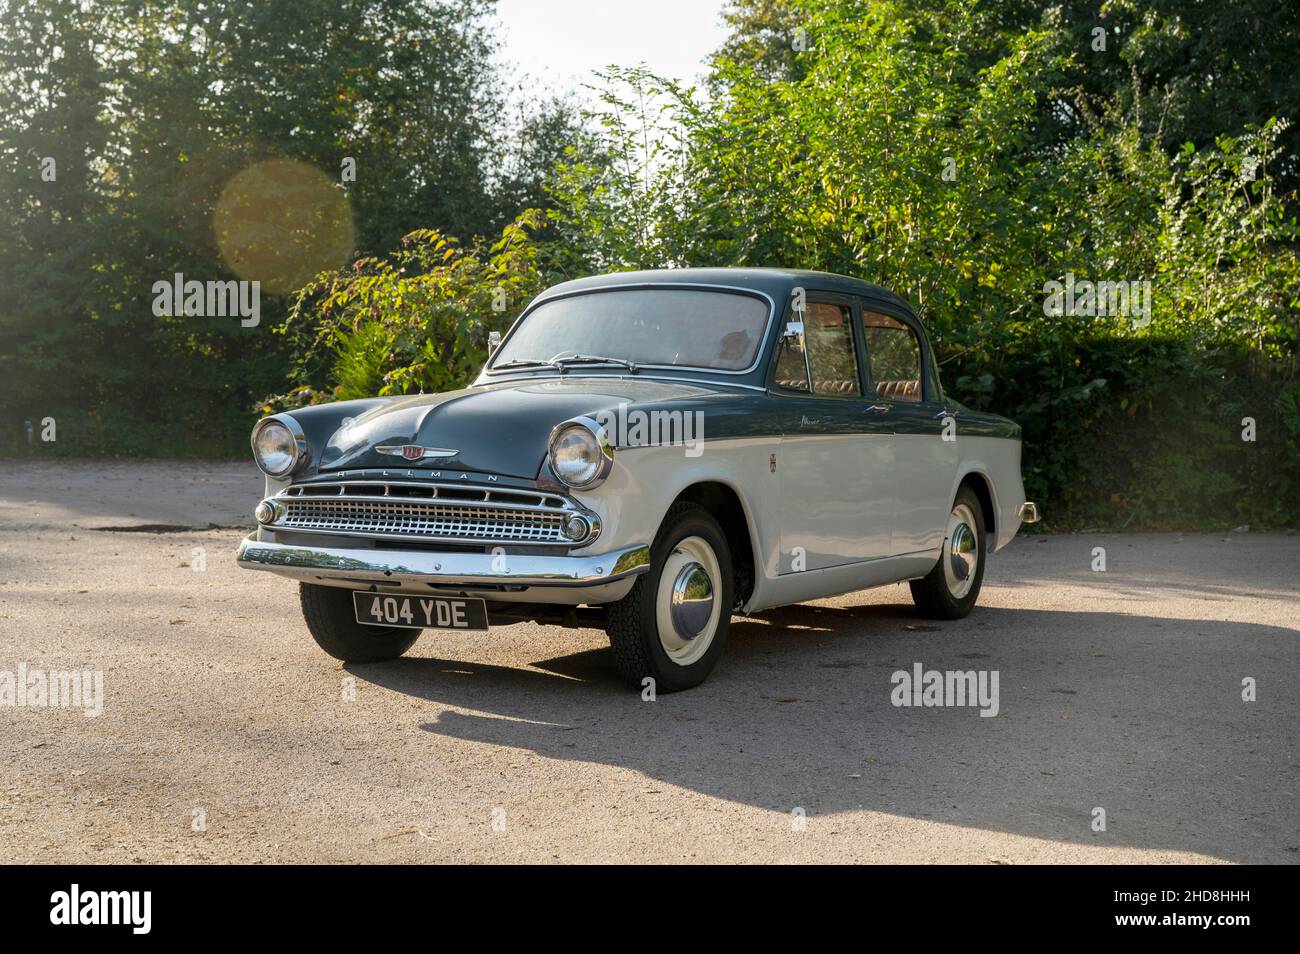 1959 Hillman Minx classic British family car Stock Photo